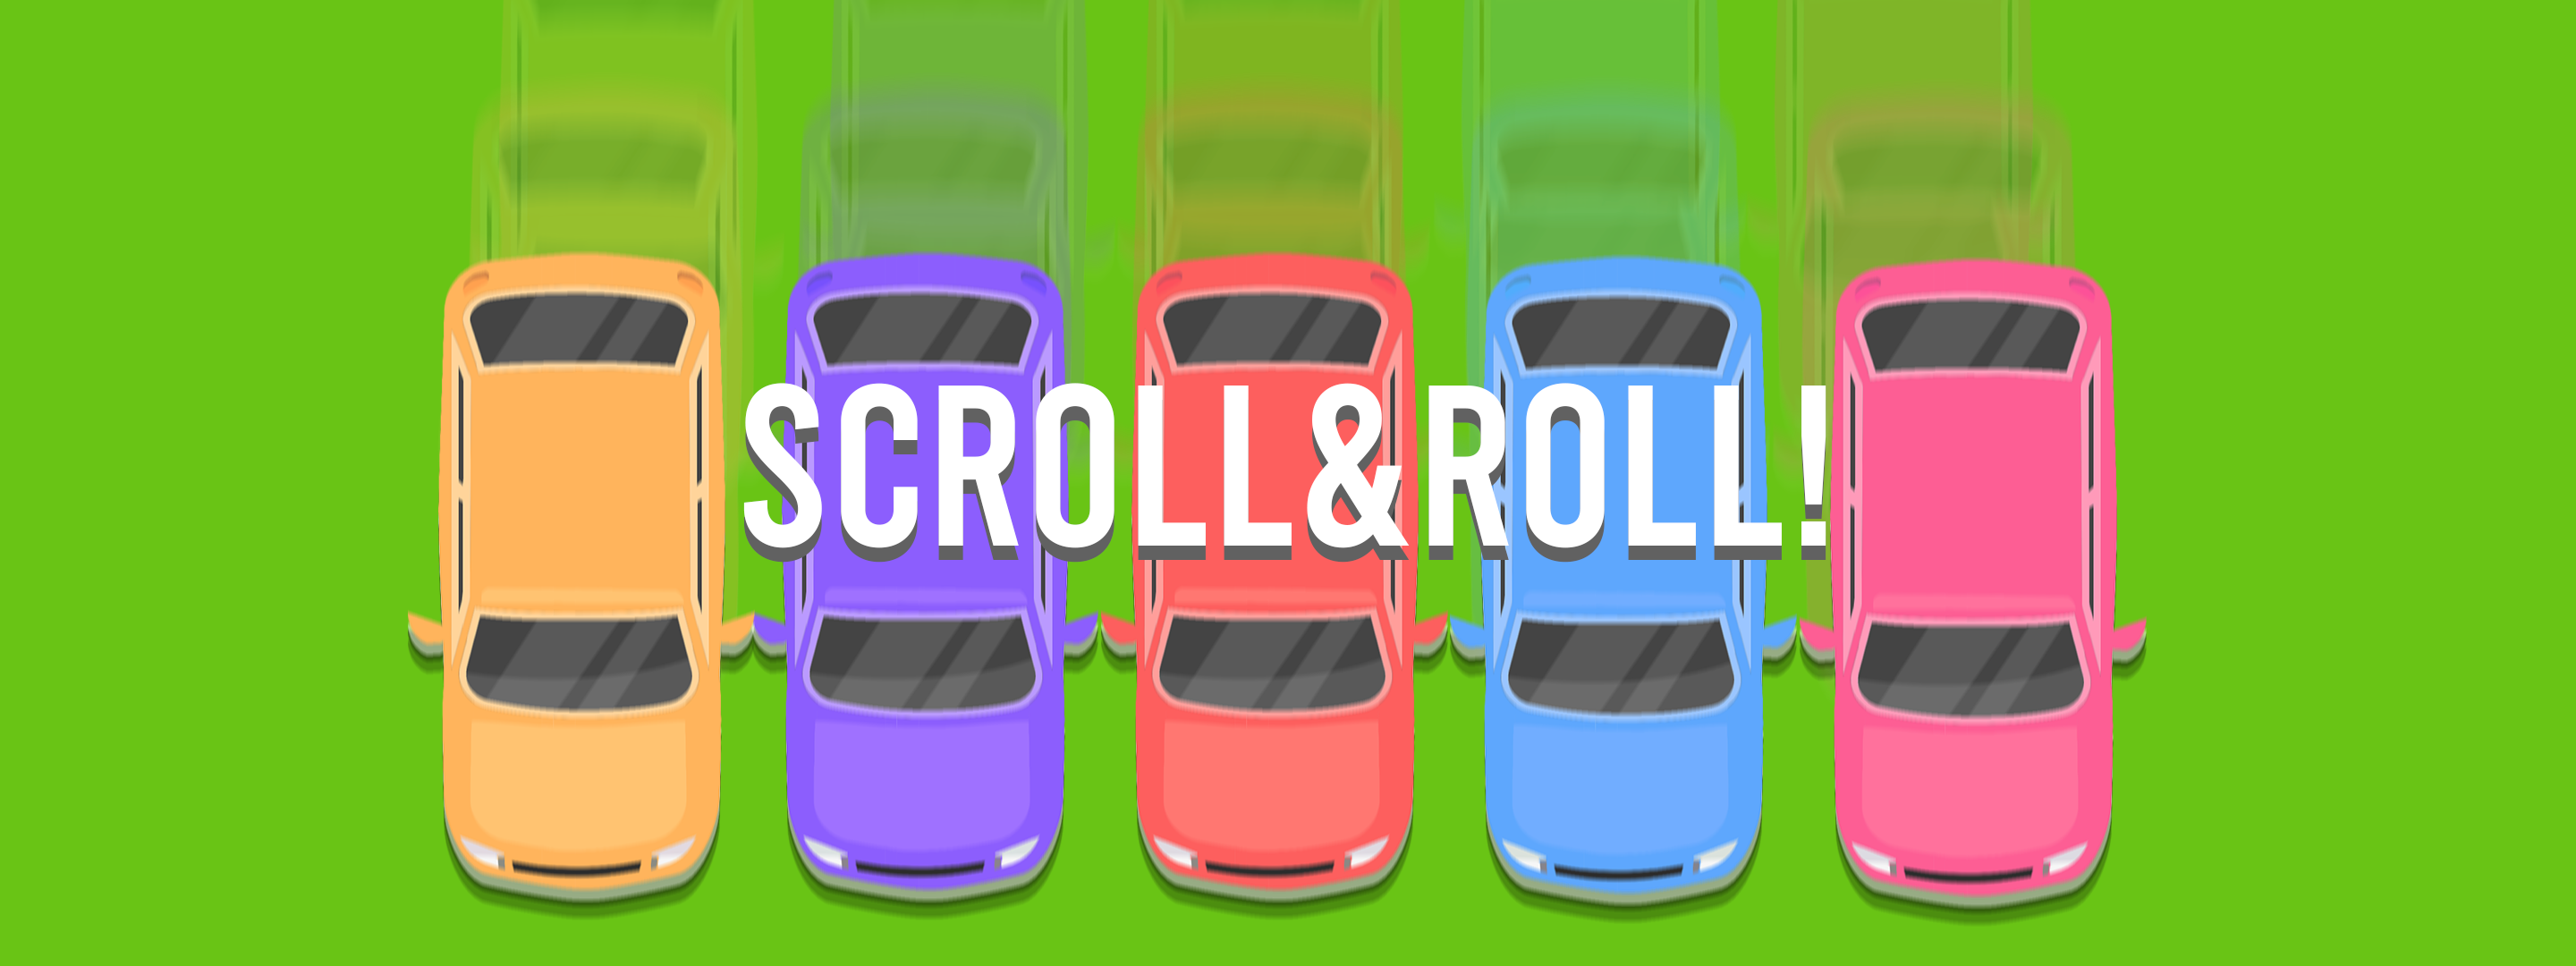 Scroll&Roll!